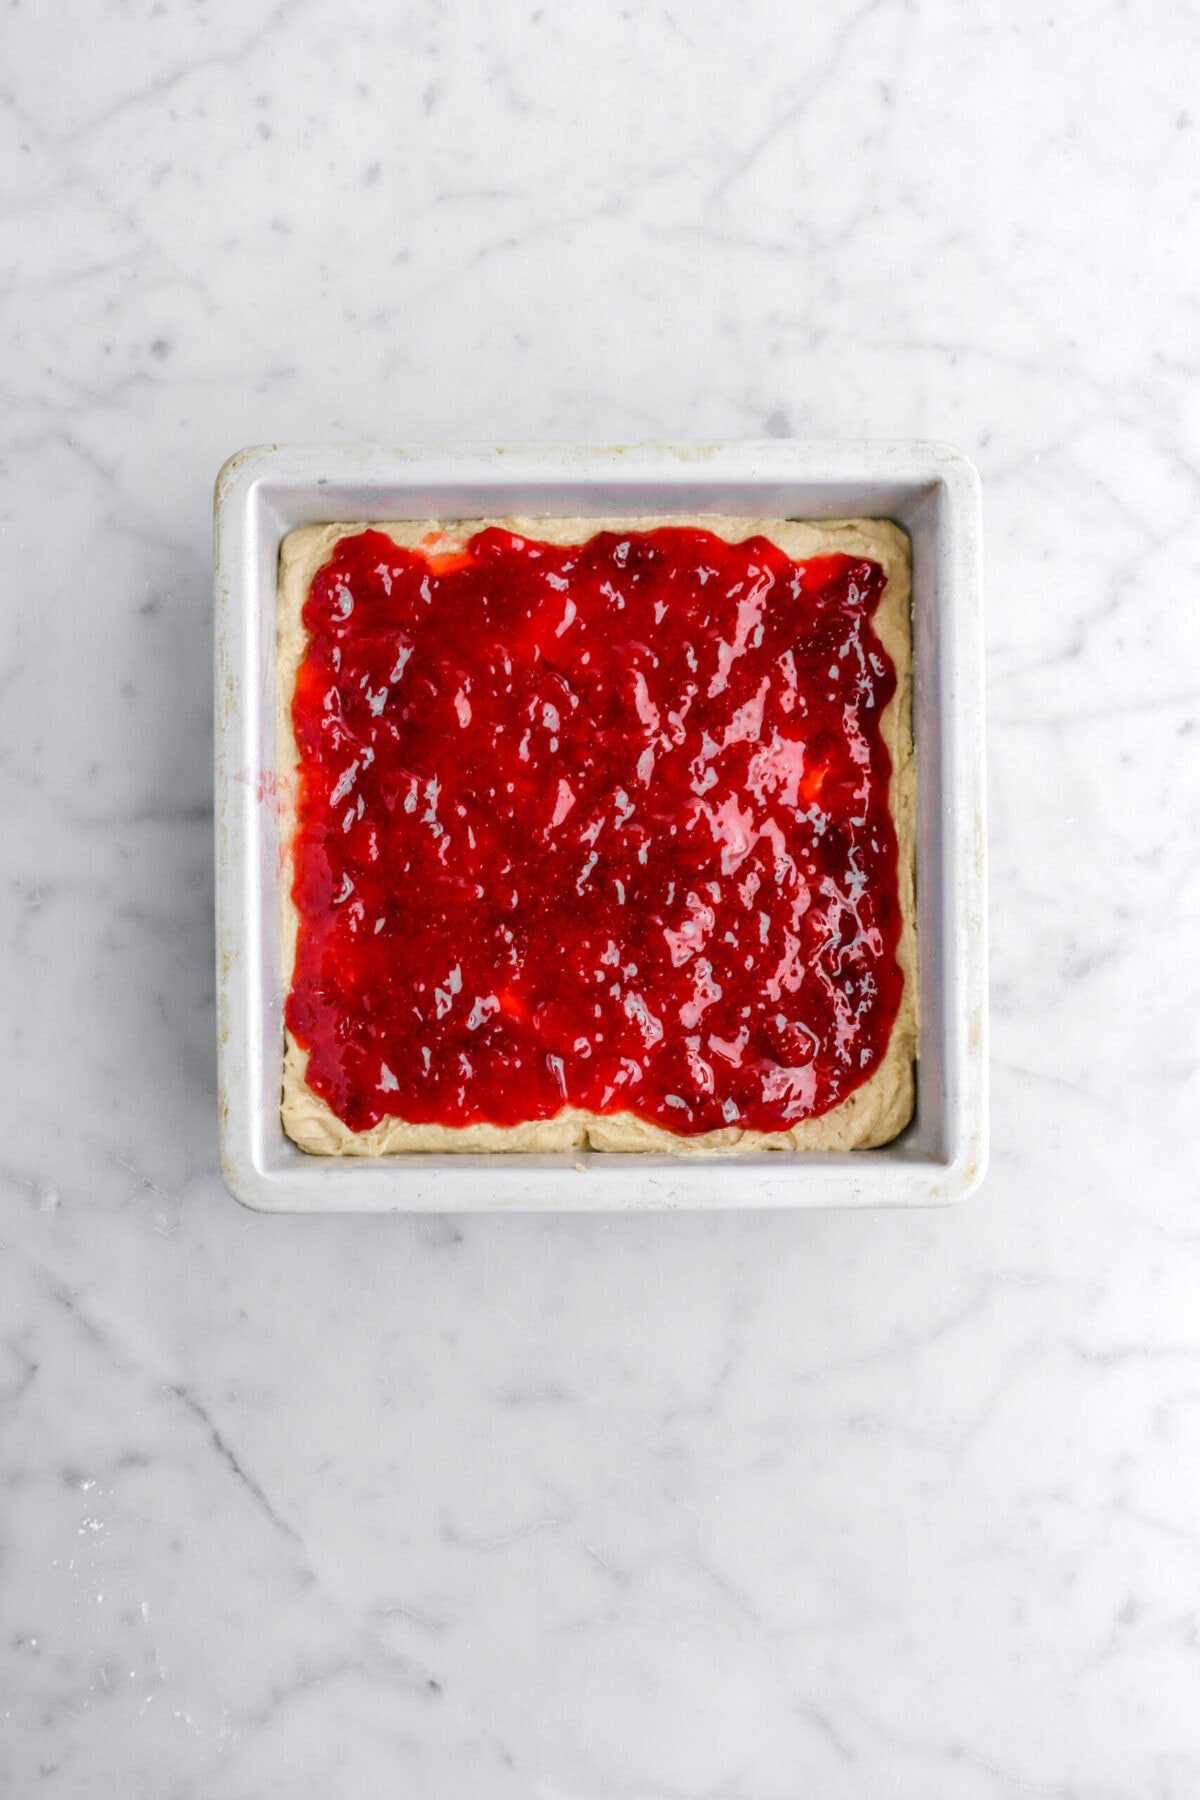 strawberry jam on top of cake batter.